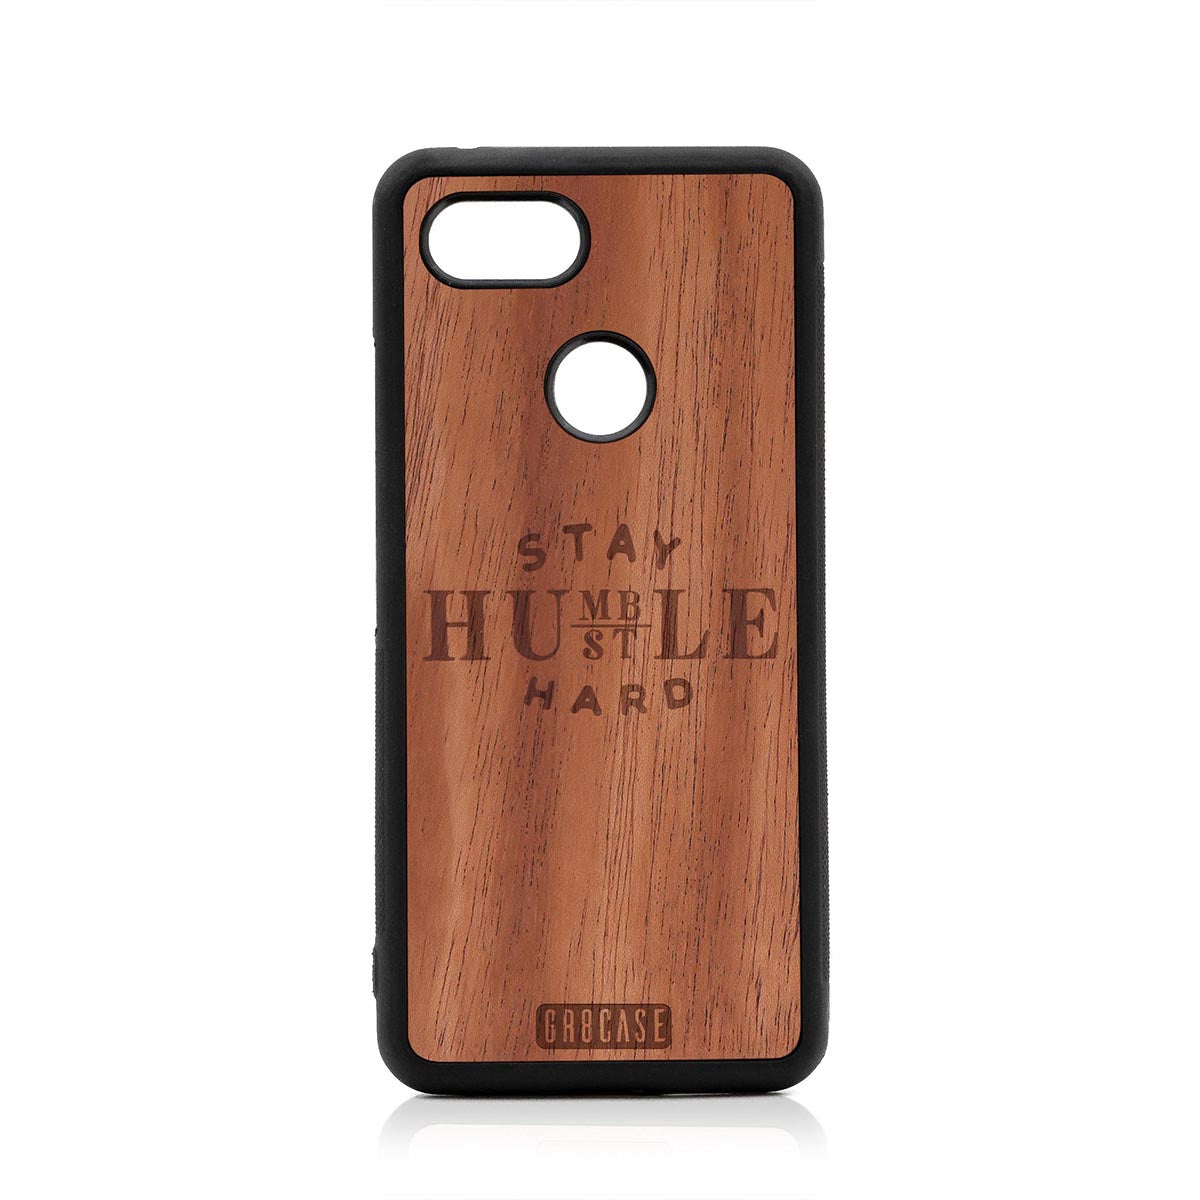 Stay Humble Hustle Hard Design Wood Case Google Pixel 3 by GR8CASE